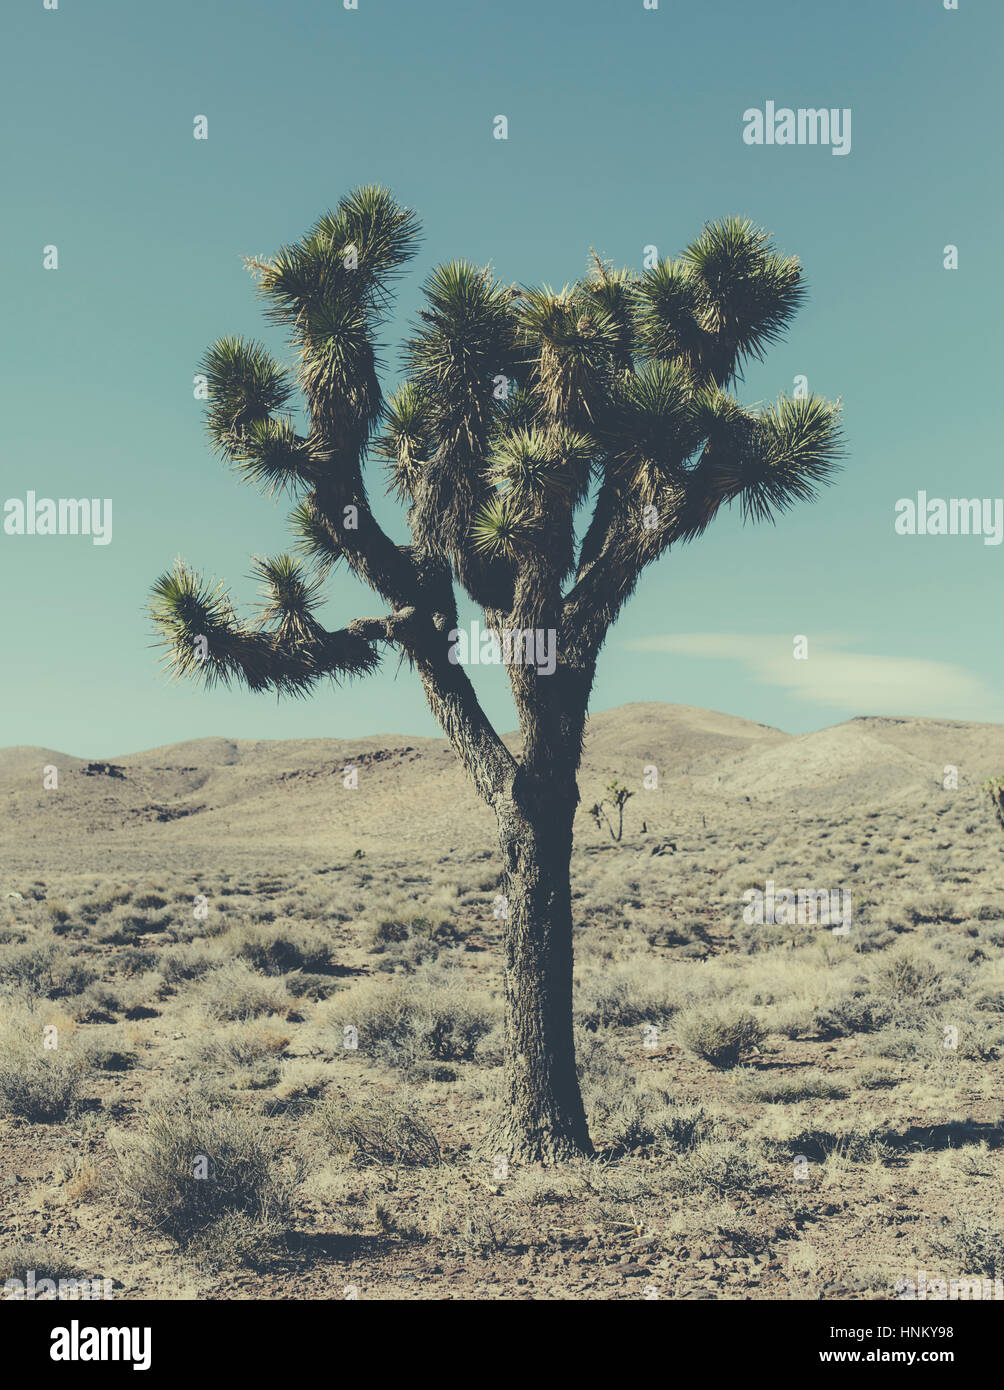 Un seul Joshua tree, Yucca brevifolia, dans un désert Banque D'Images